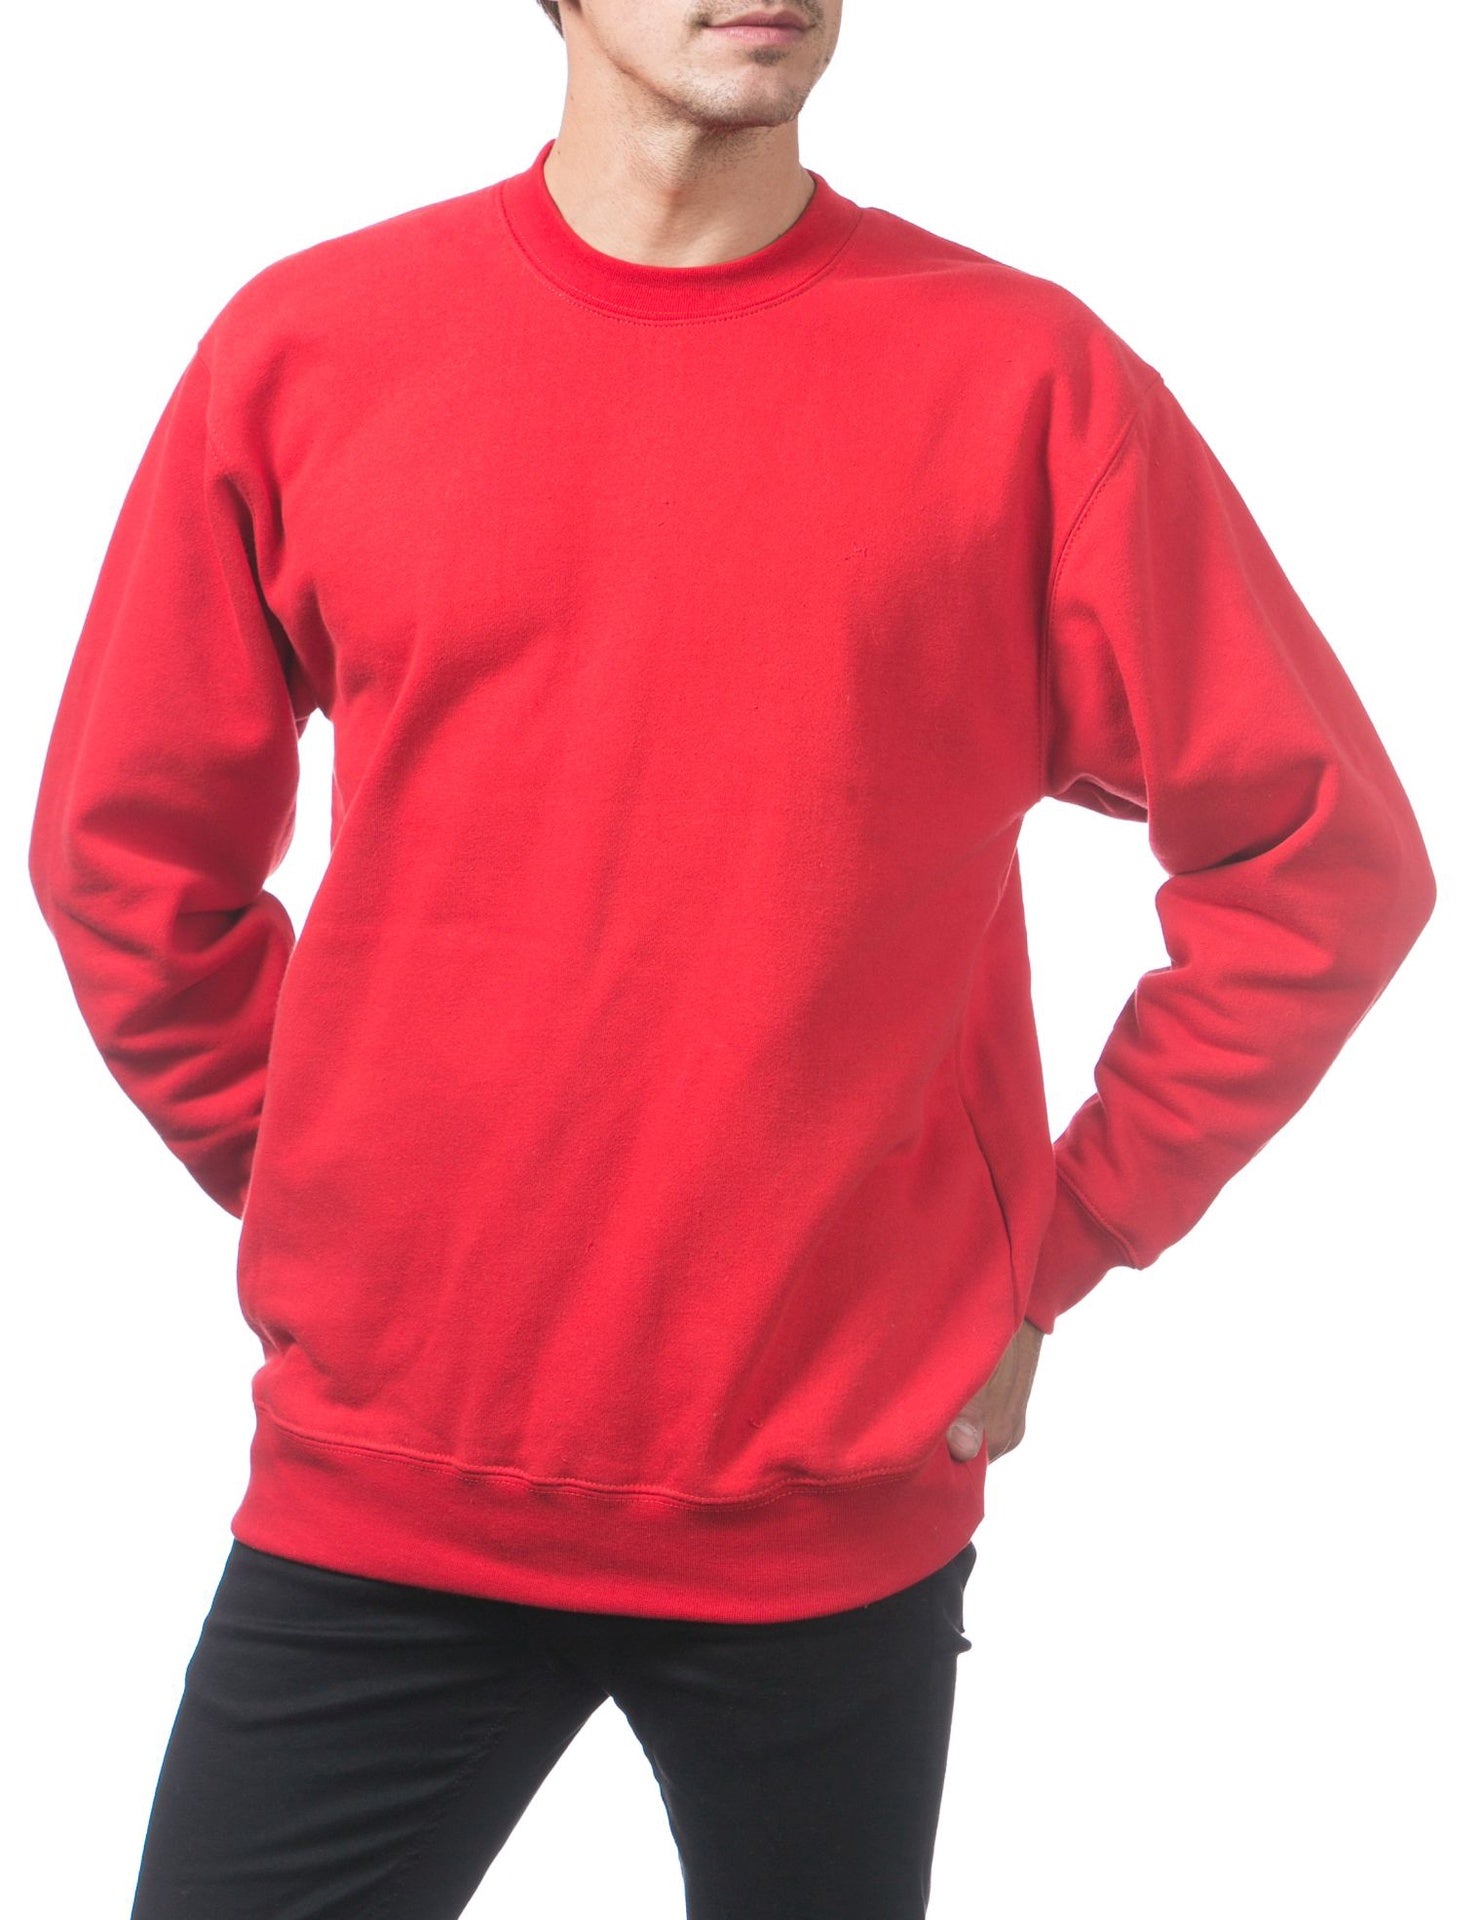 Pro Club Heavyweight Crew Neck Fleece Pullover Sweater (13oz) - RED